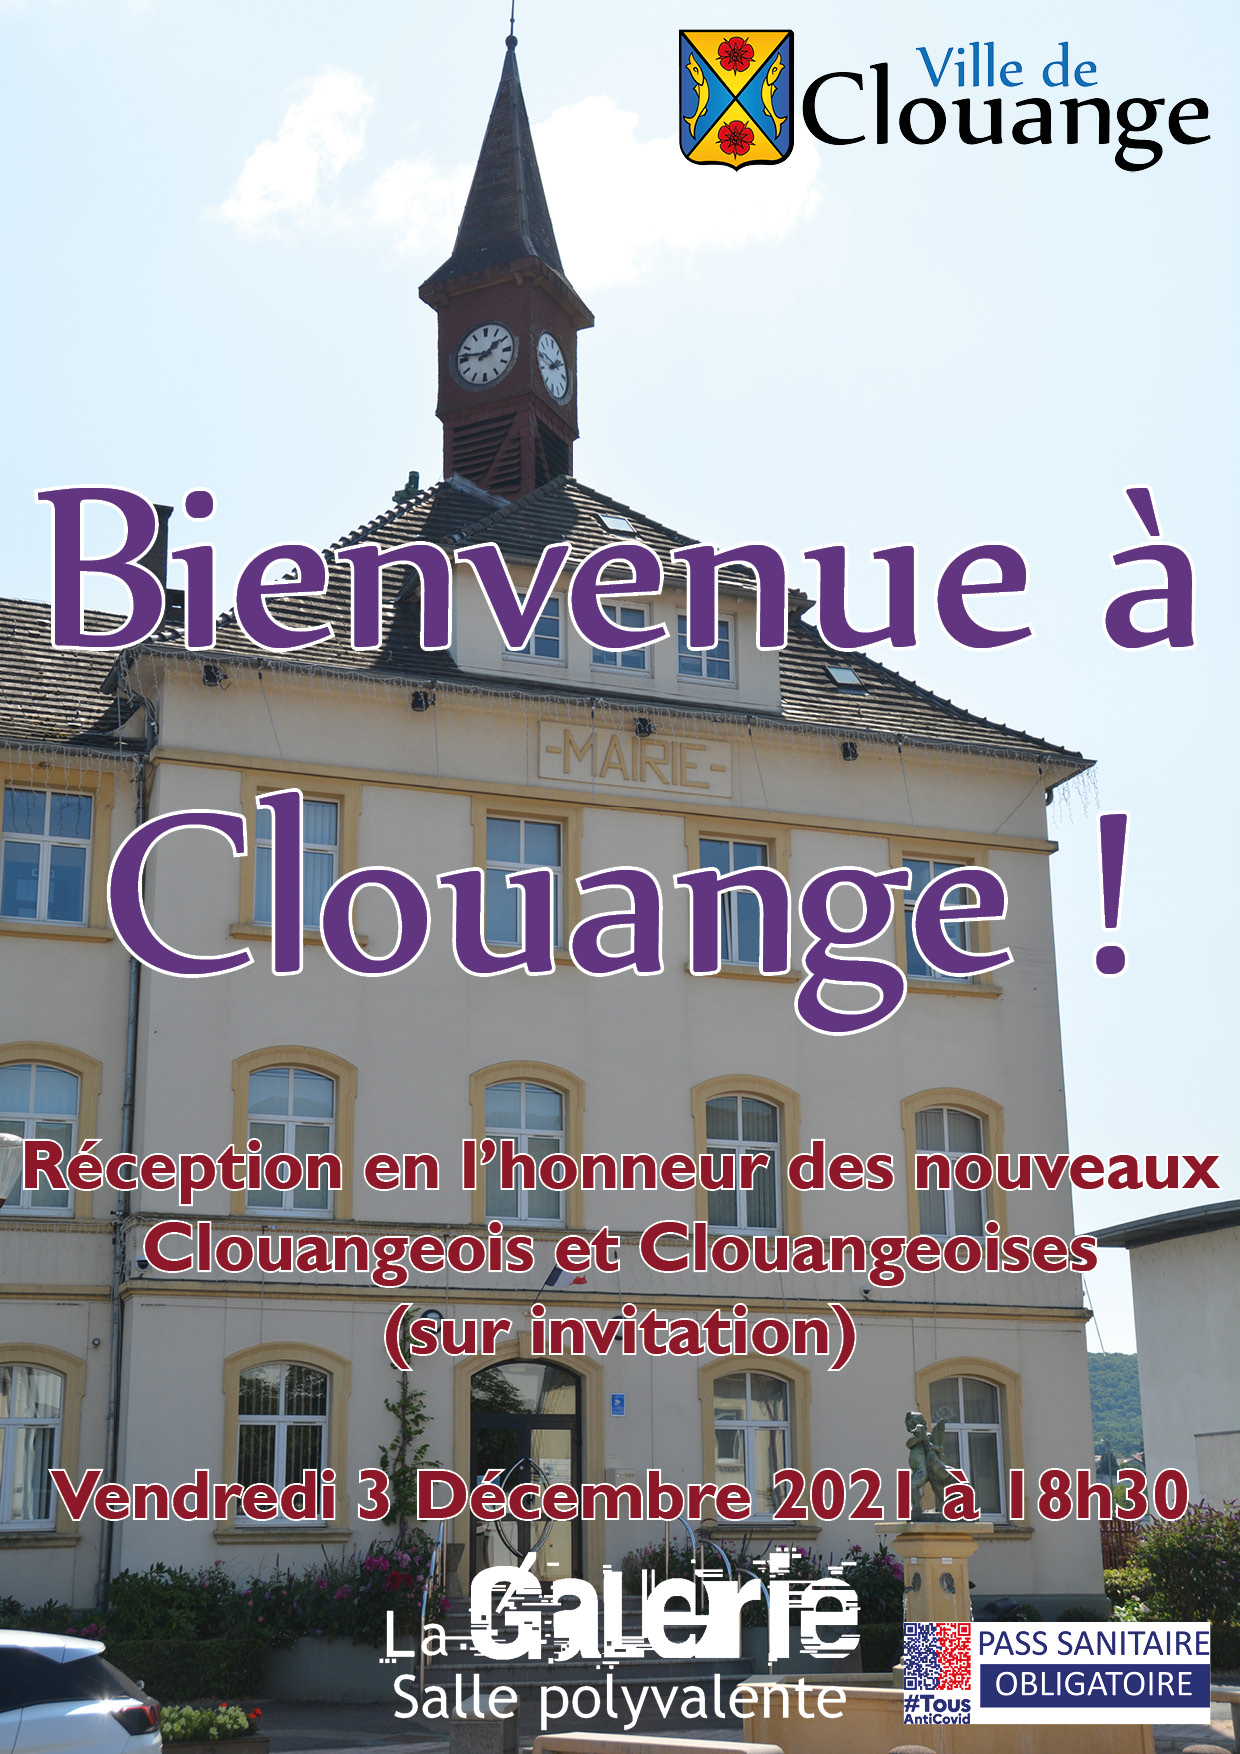 Bienvenue à Clouange !